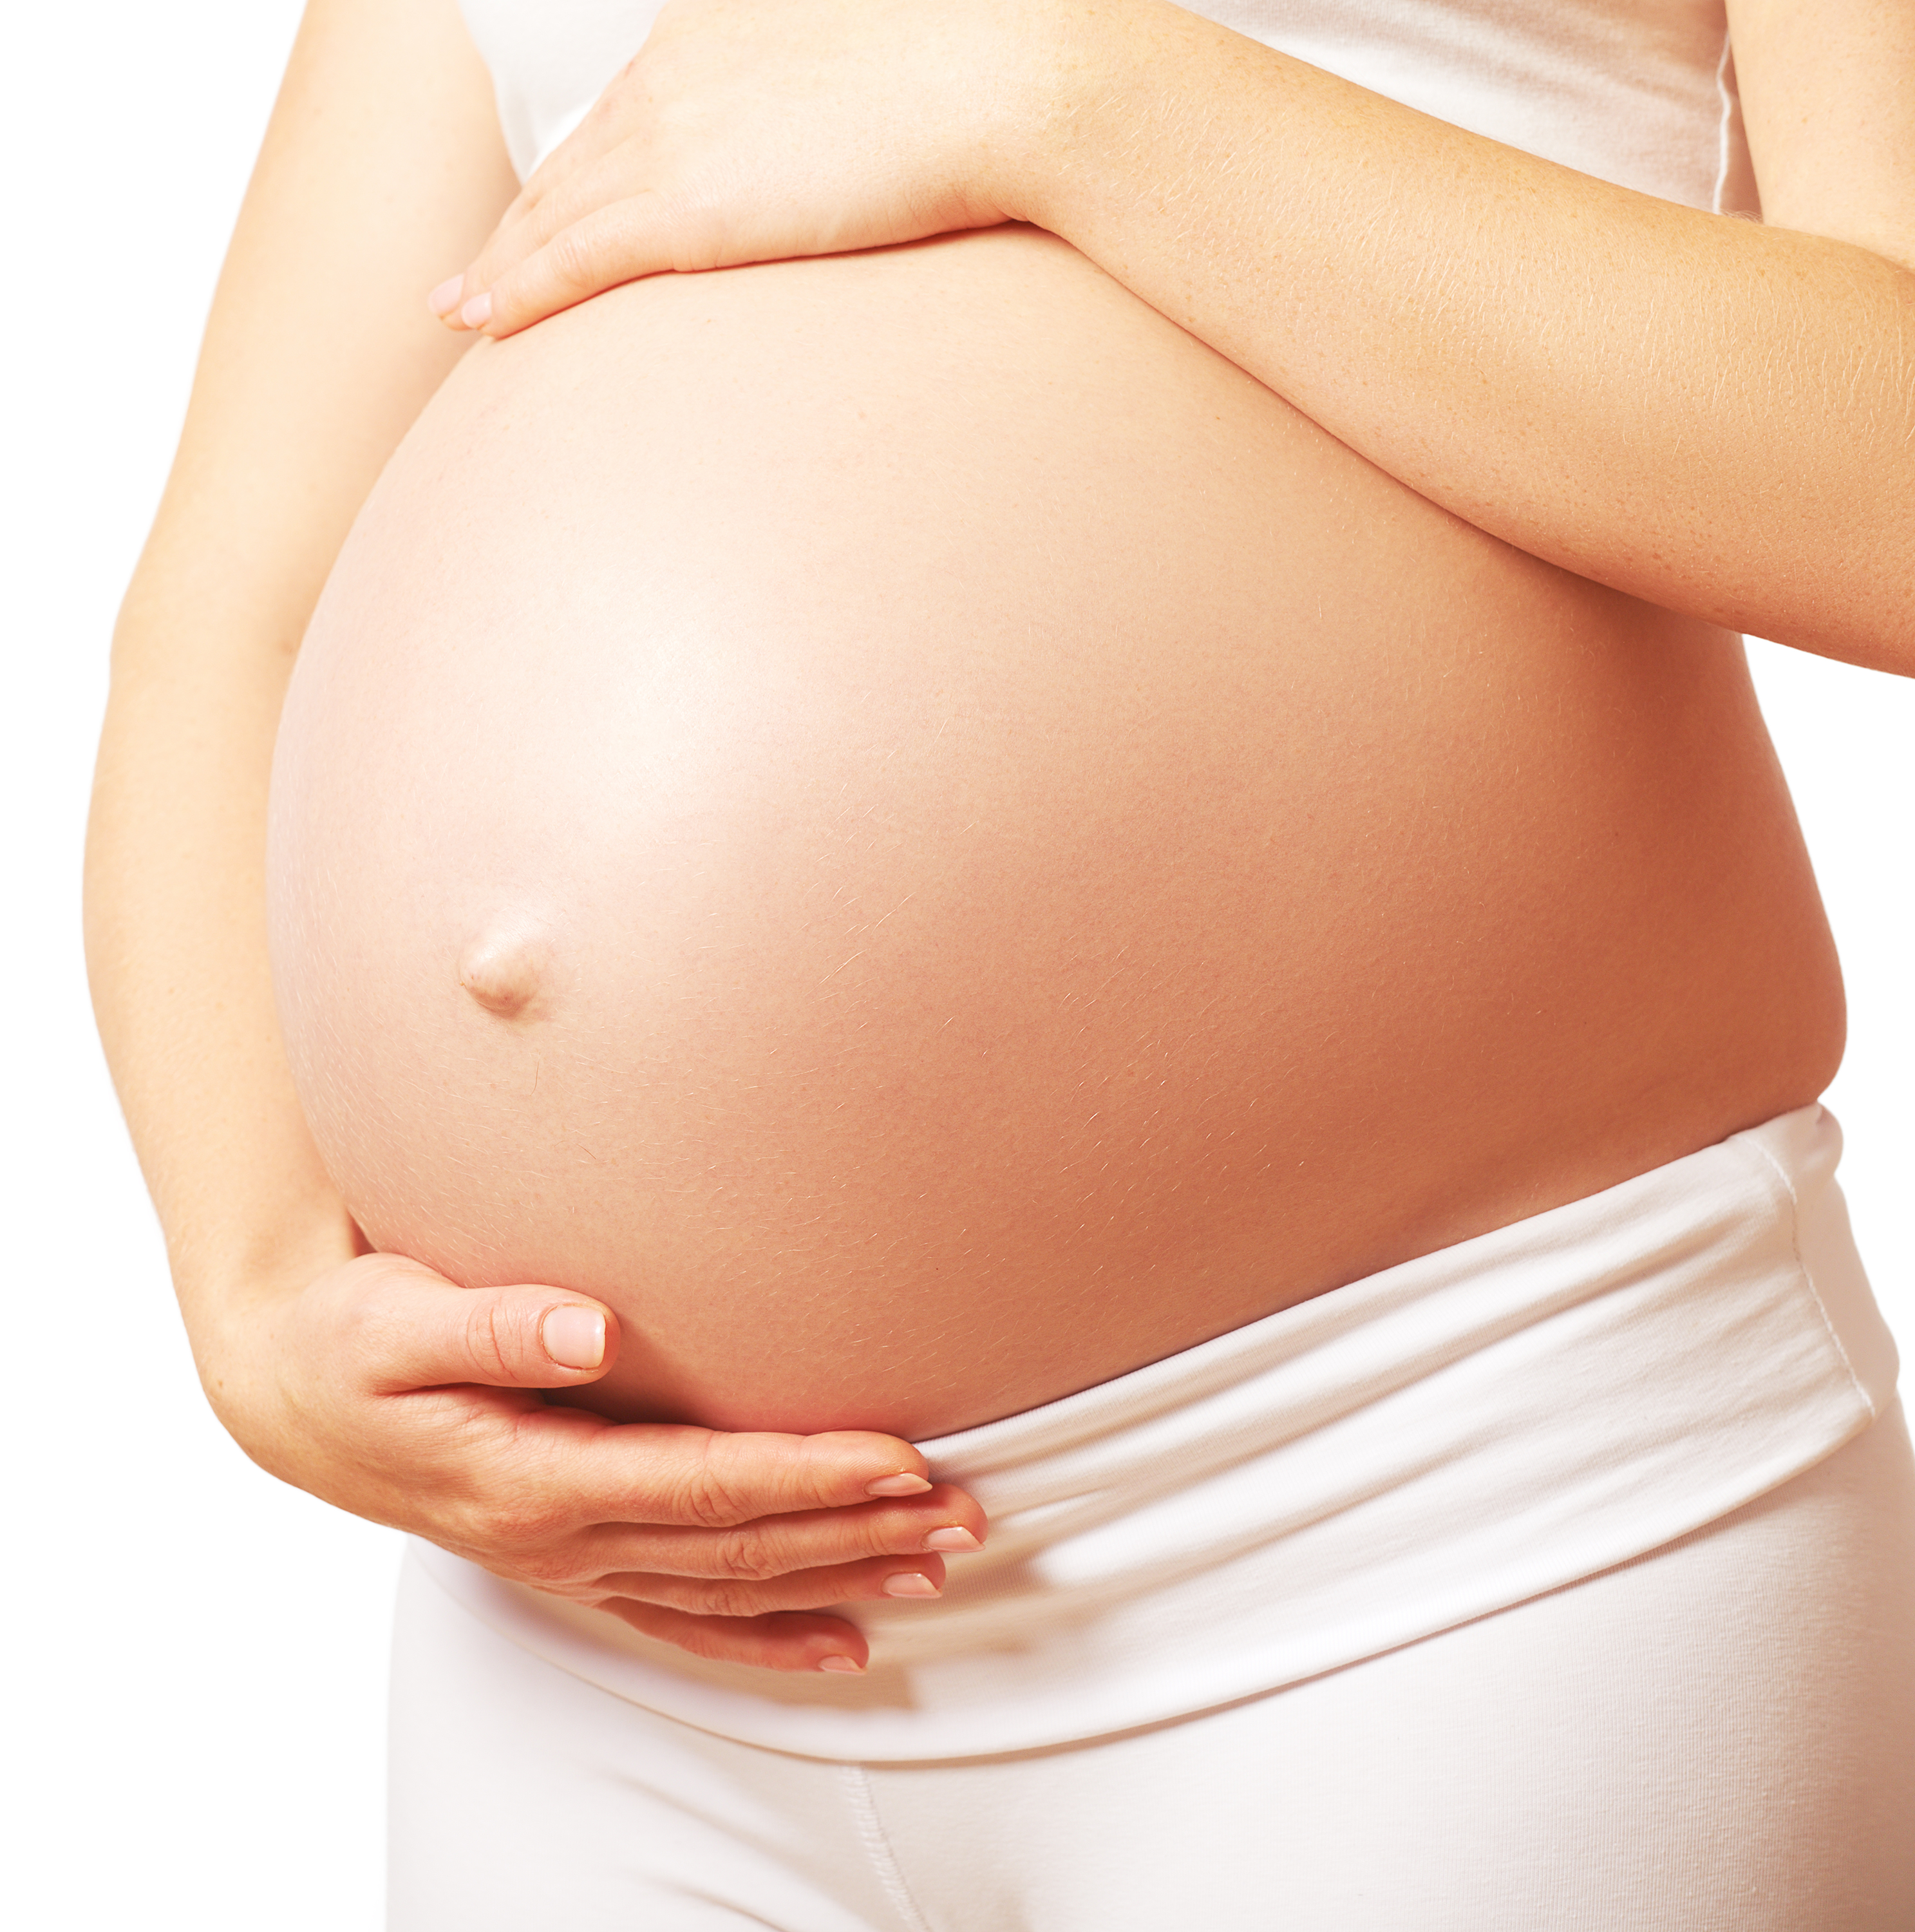 Perfil de mujer embarazada en etapa avanzada 